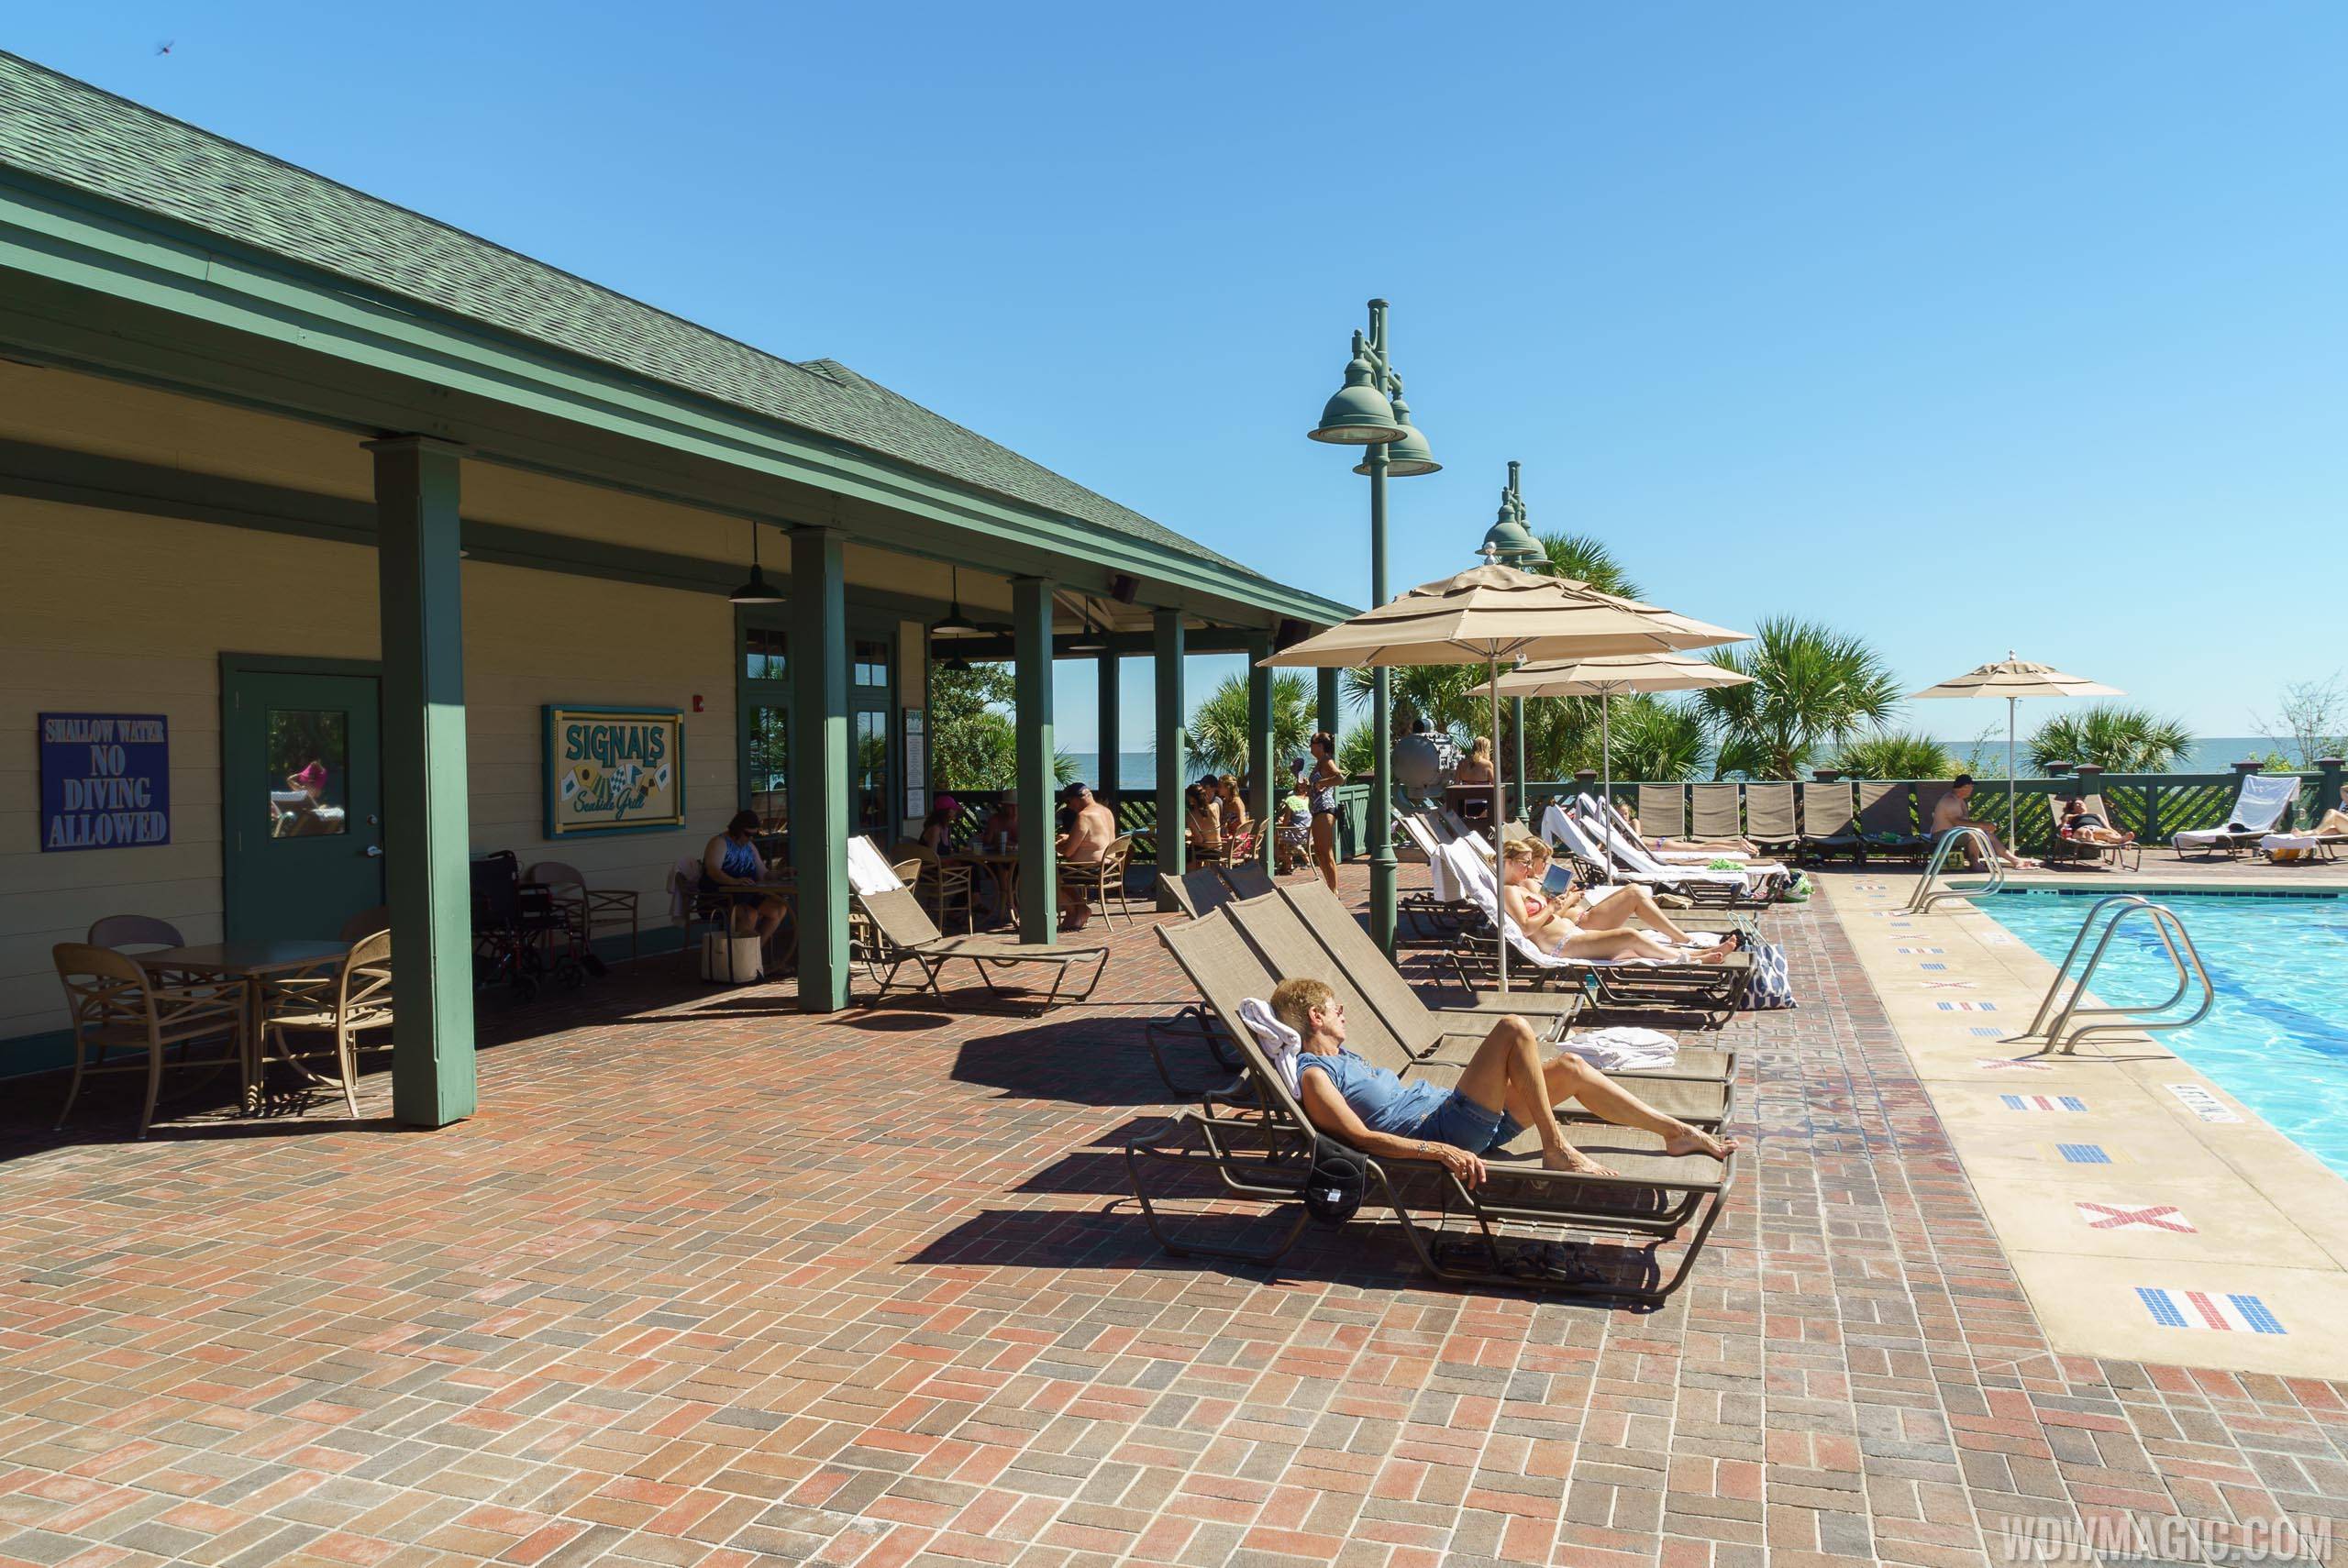 Disney's Hilton Head Island Resort - Beach House Signals quick service dining